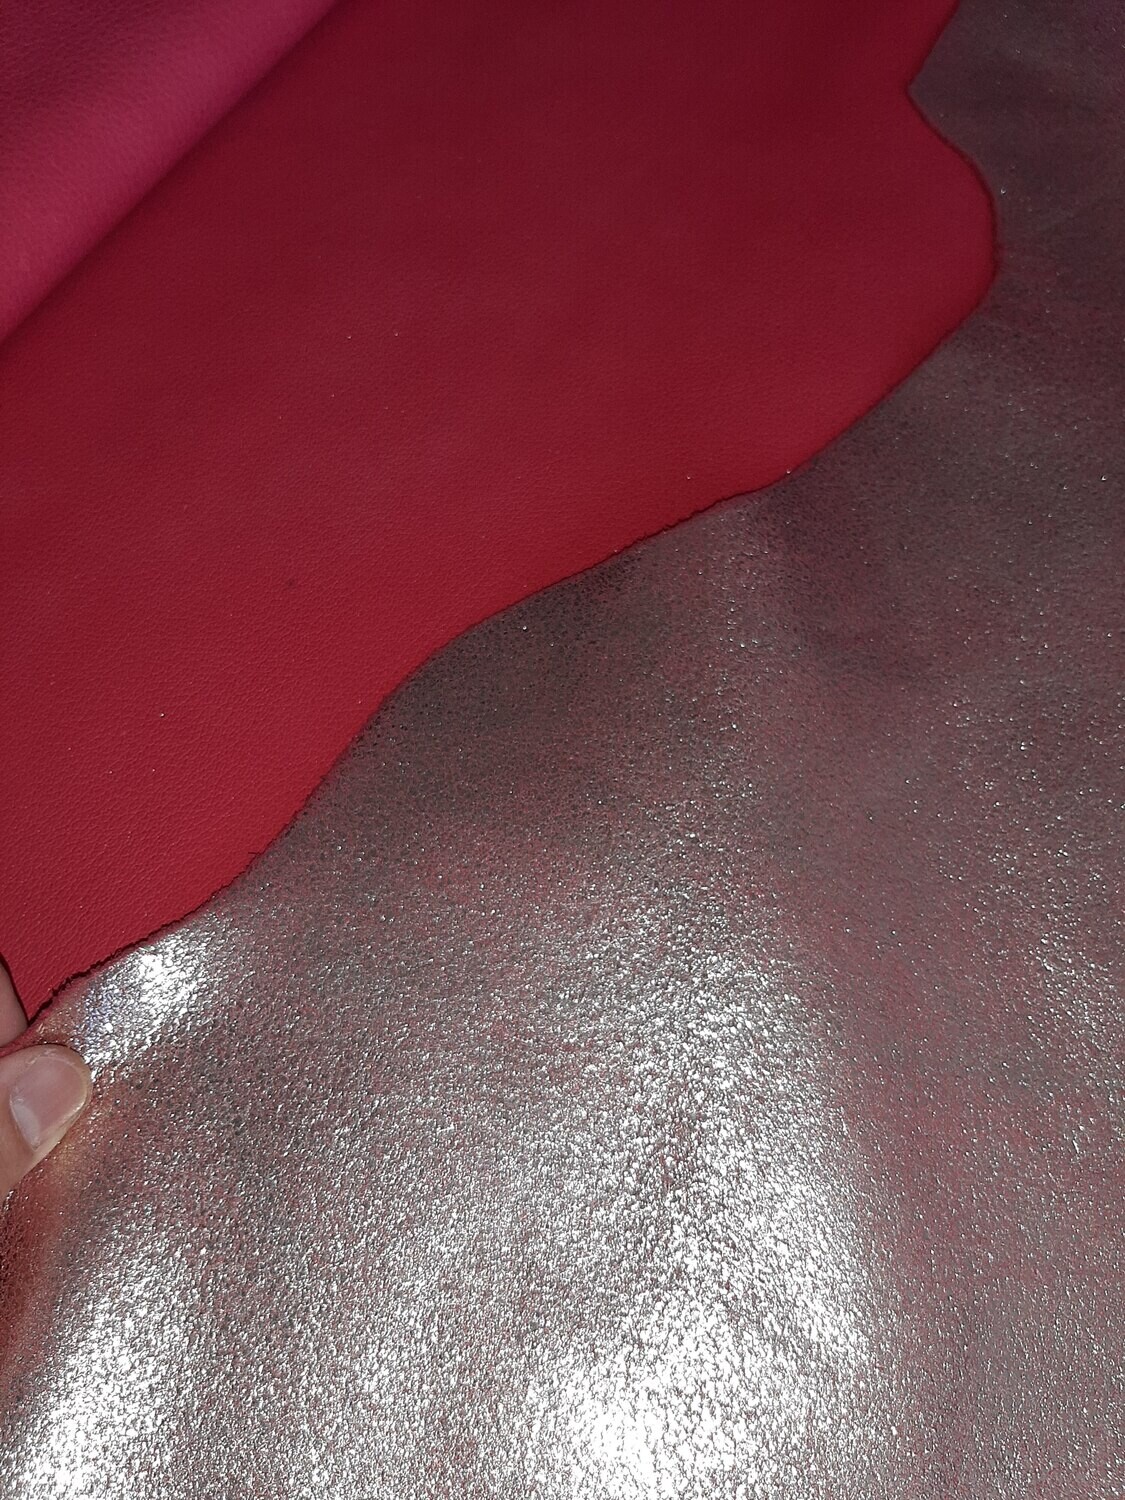 Leather bovine pink chock color